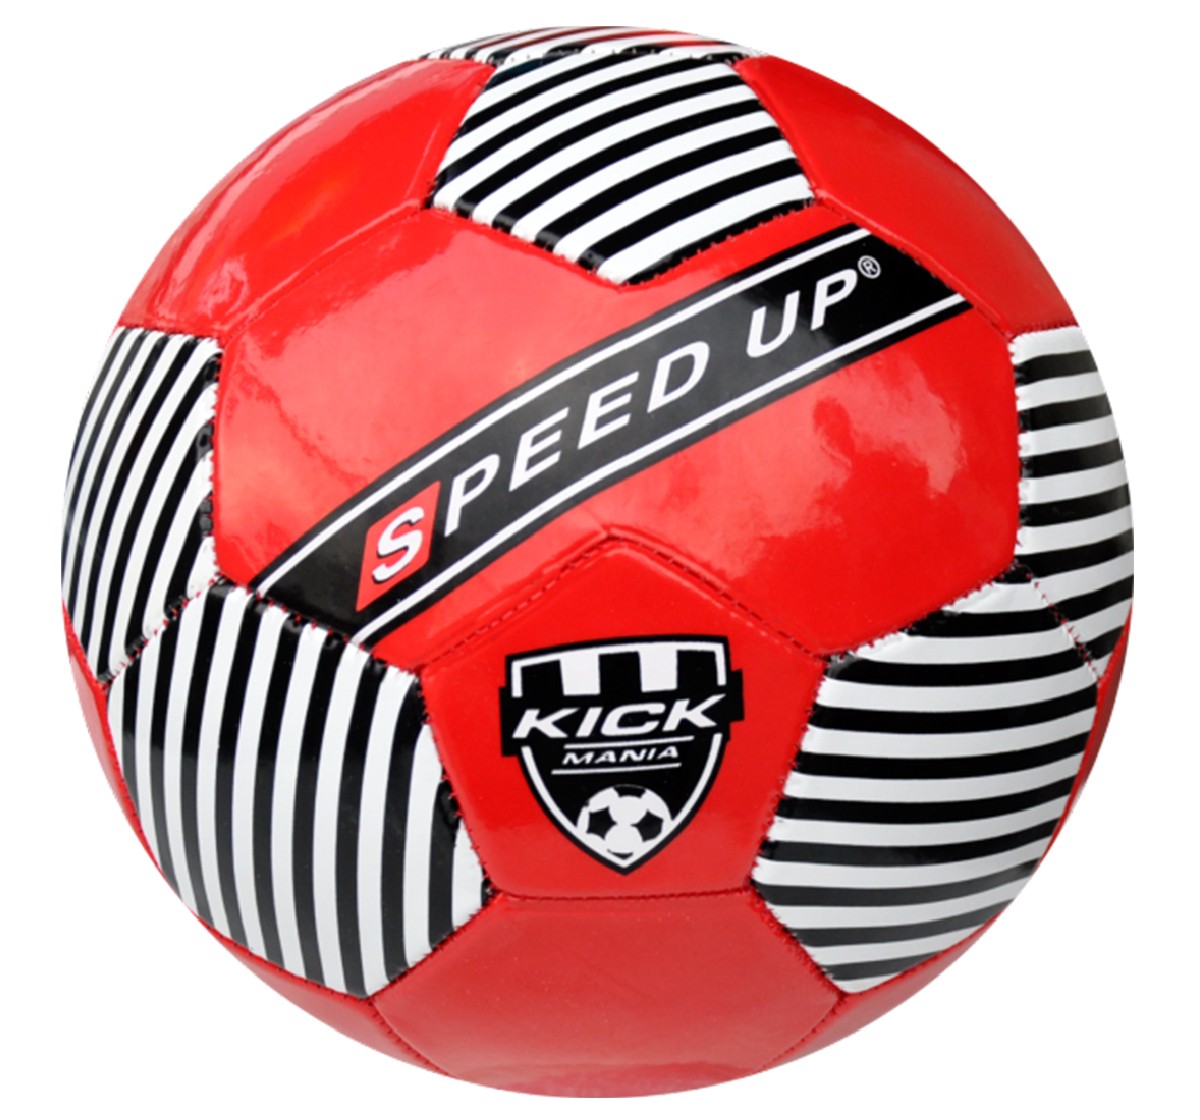 Speed Up Football Size 5 Kick Mania,  10Y+ (Multicolor)